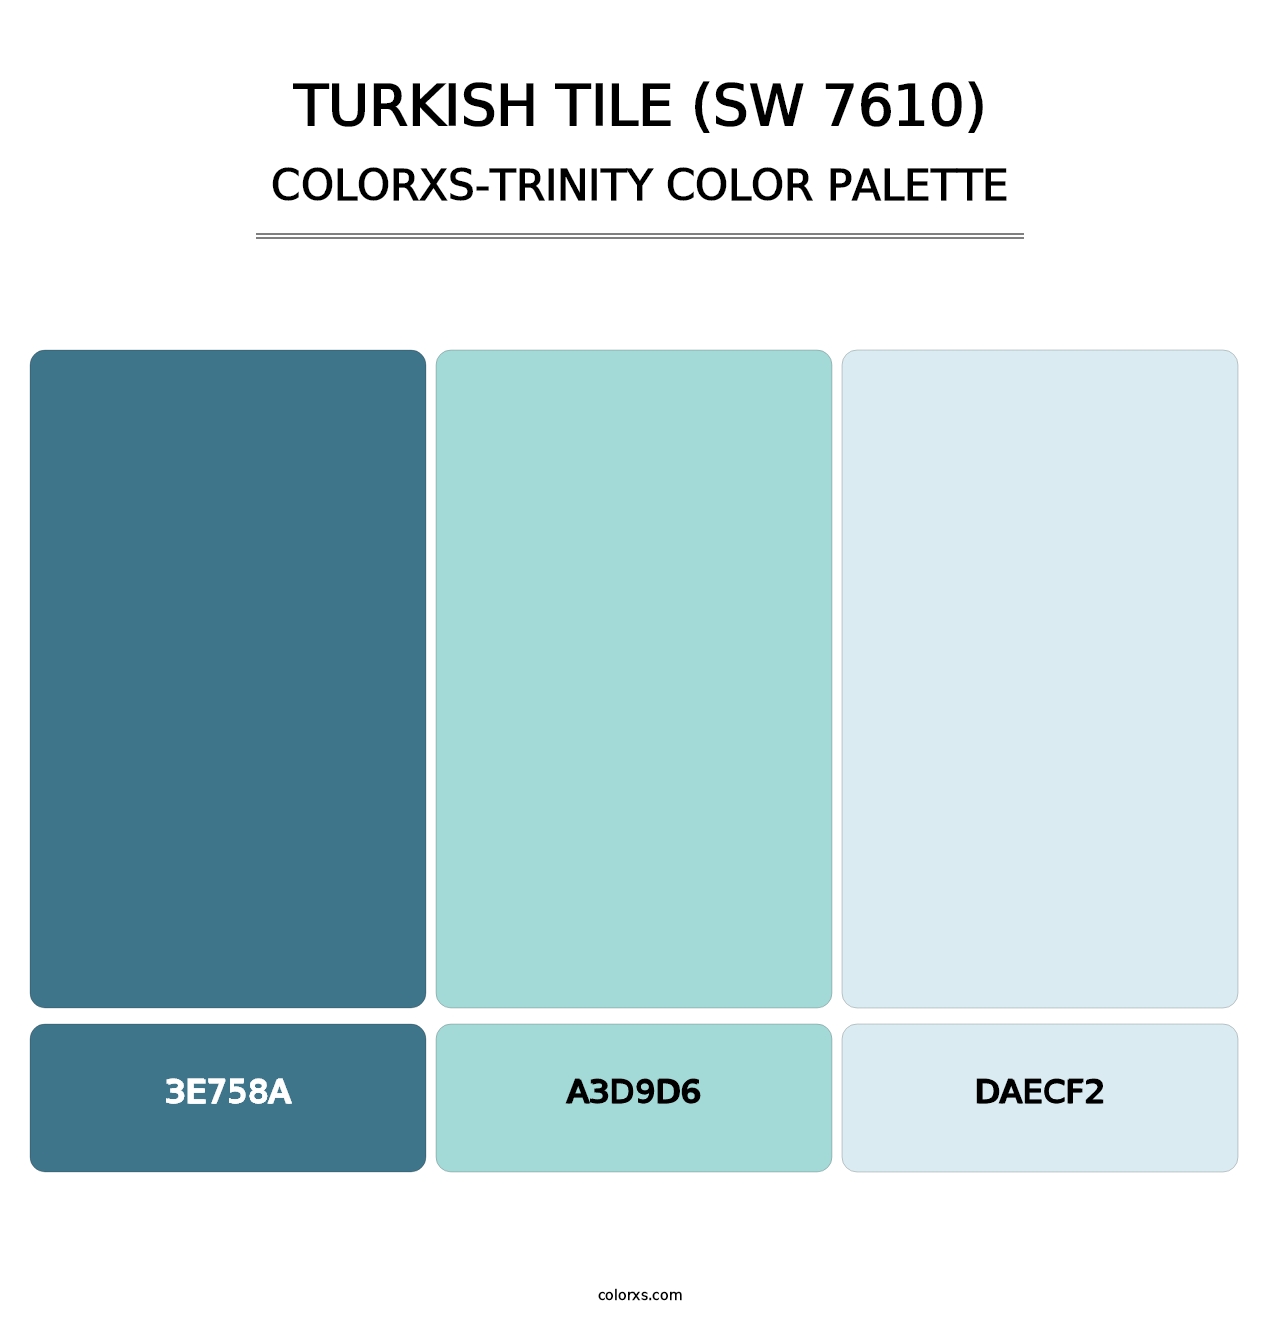 Turkish Tile (SW 7610) - Colorxs Trinity Palette